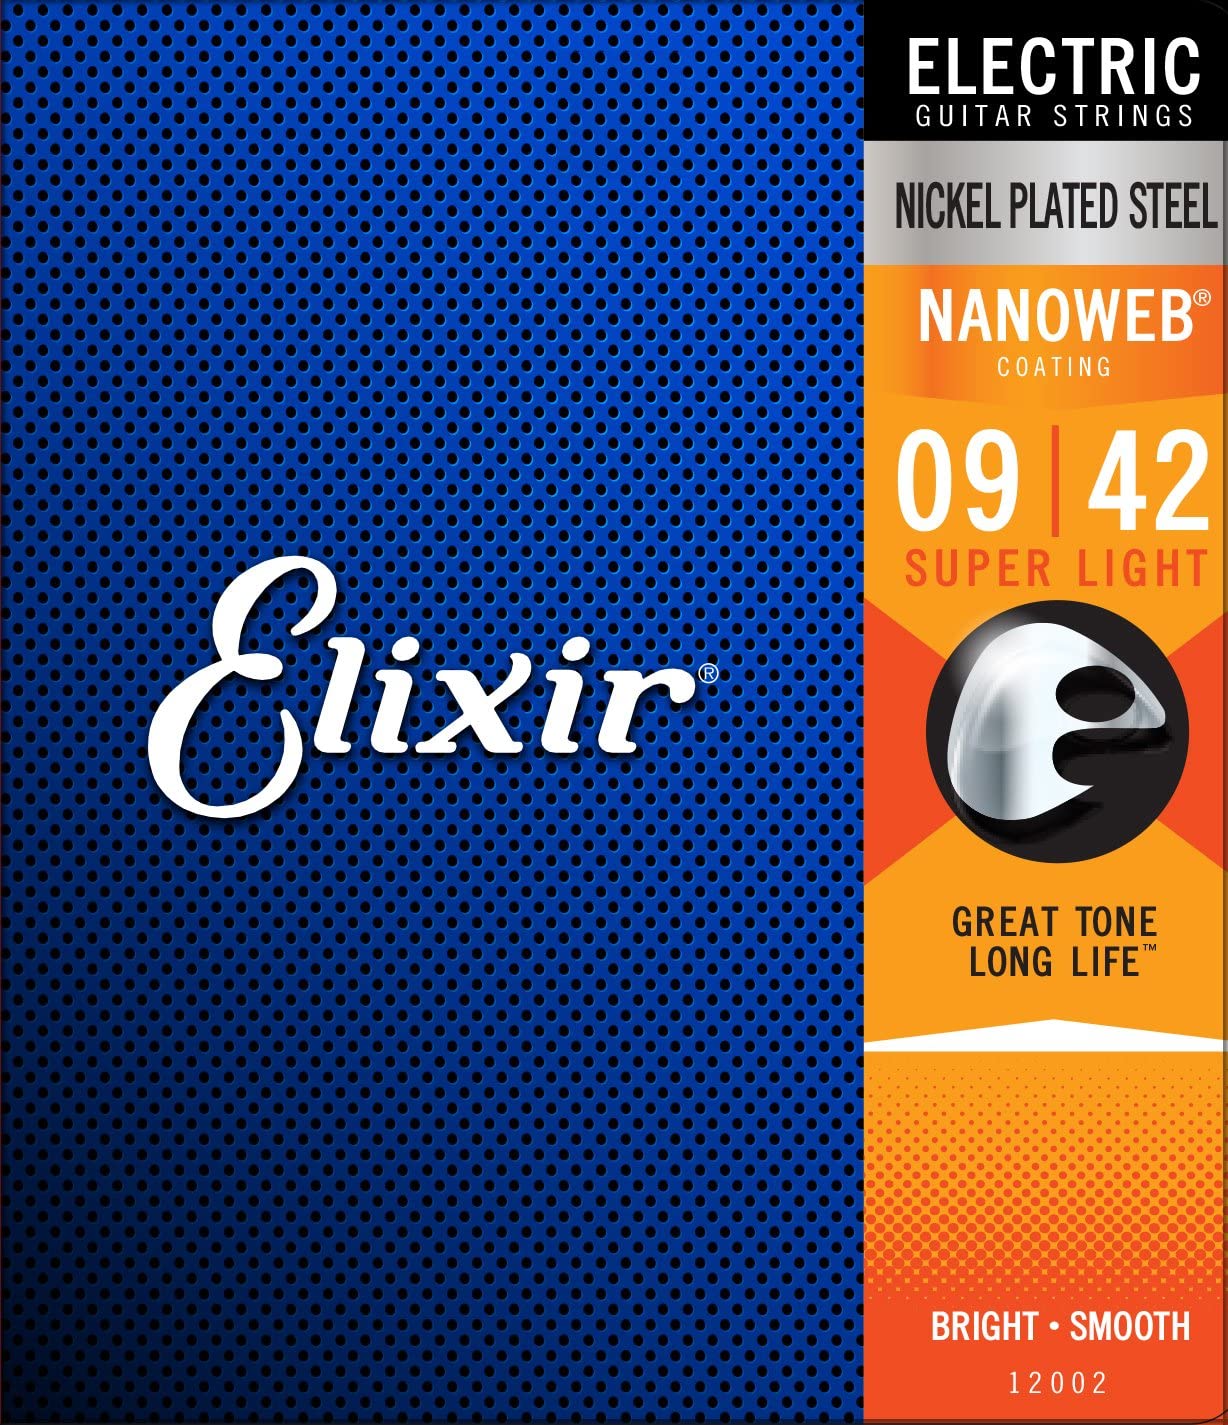 Køb Elixir Nanoweb 12002 09-42 Super light - Pris 119.00 kr.